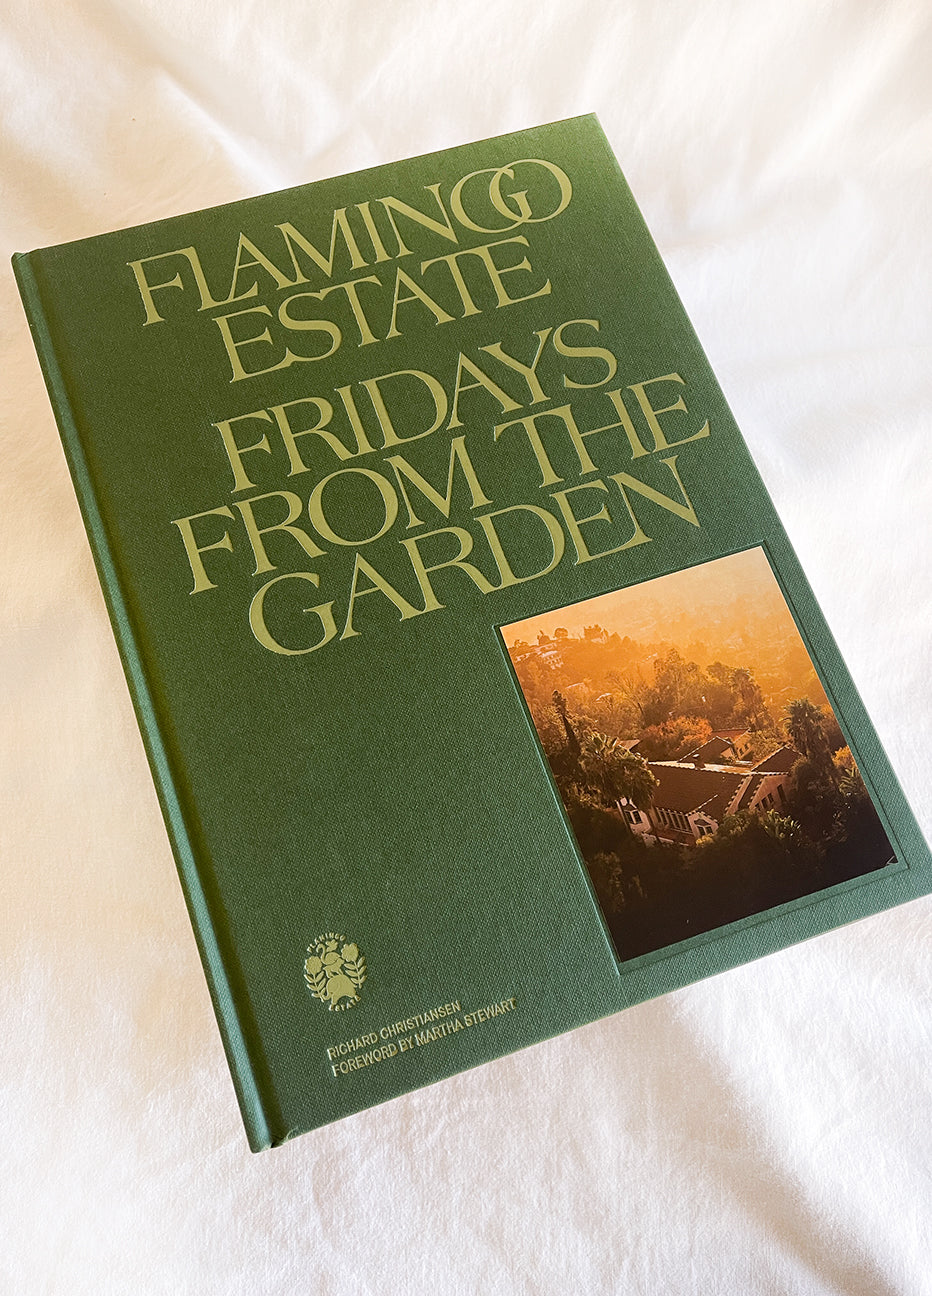 Fridays From The Garden: A Flamingo Estate Cookbook